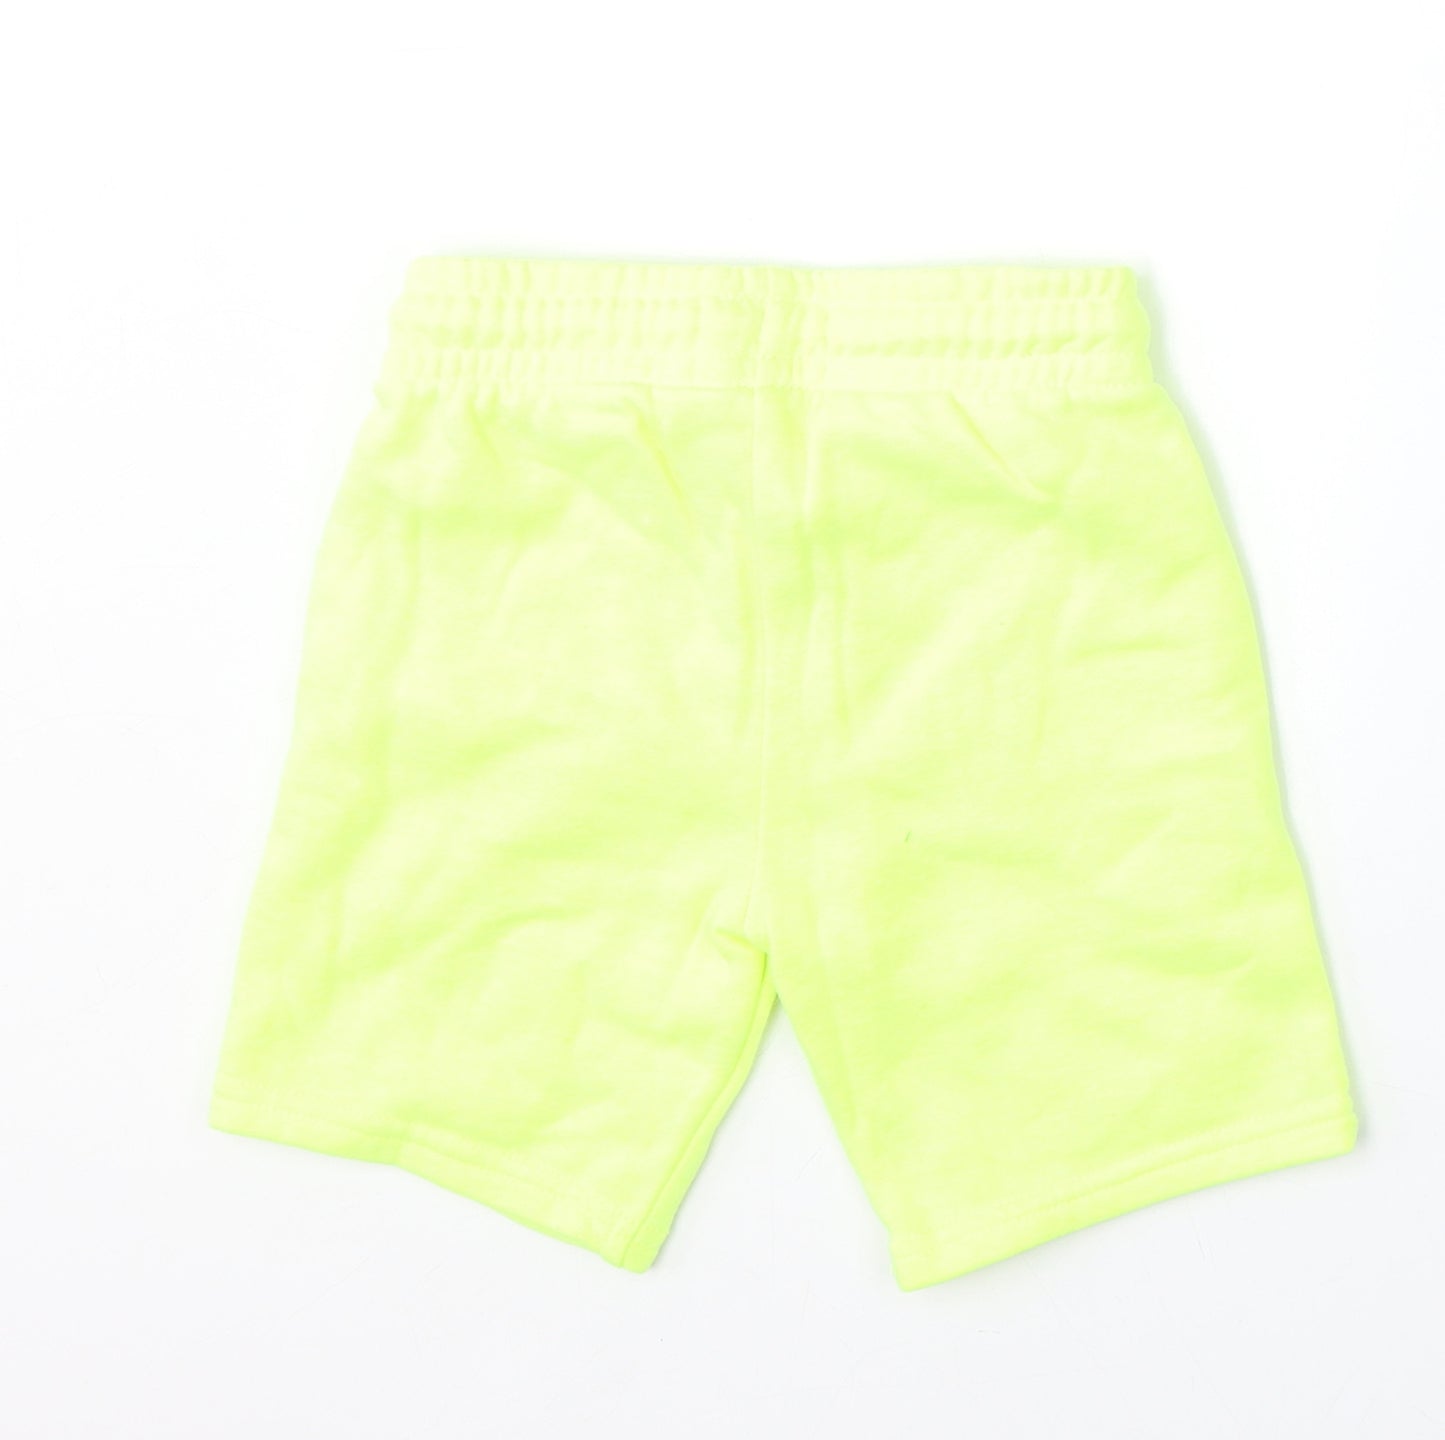 Primark Boys Yellow  Cotton Sweat Shorts Size 4-5 Years  Regular